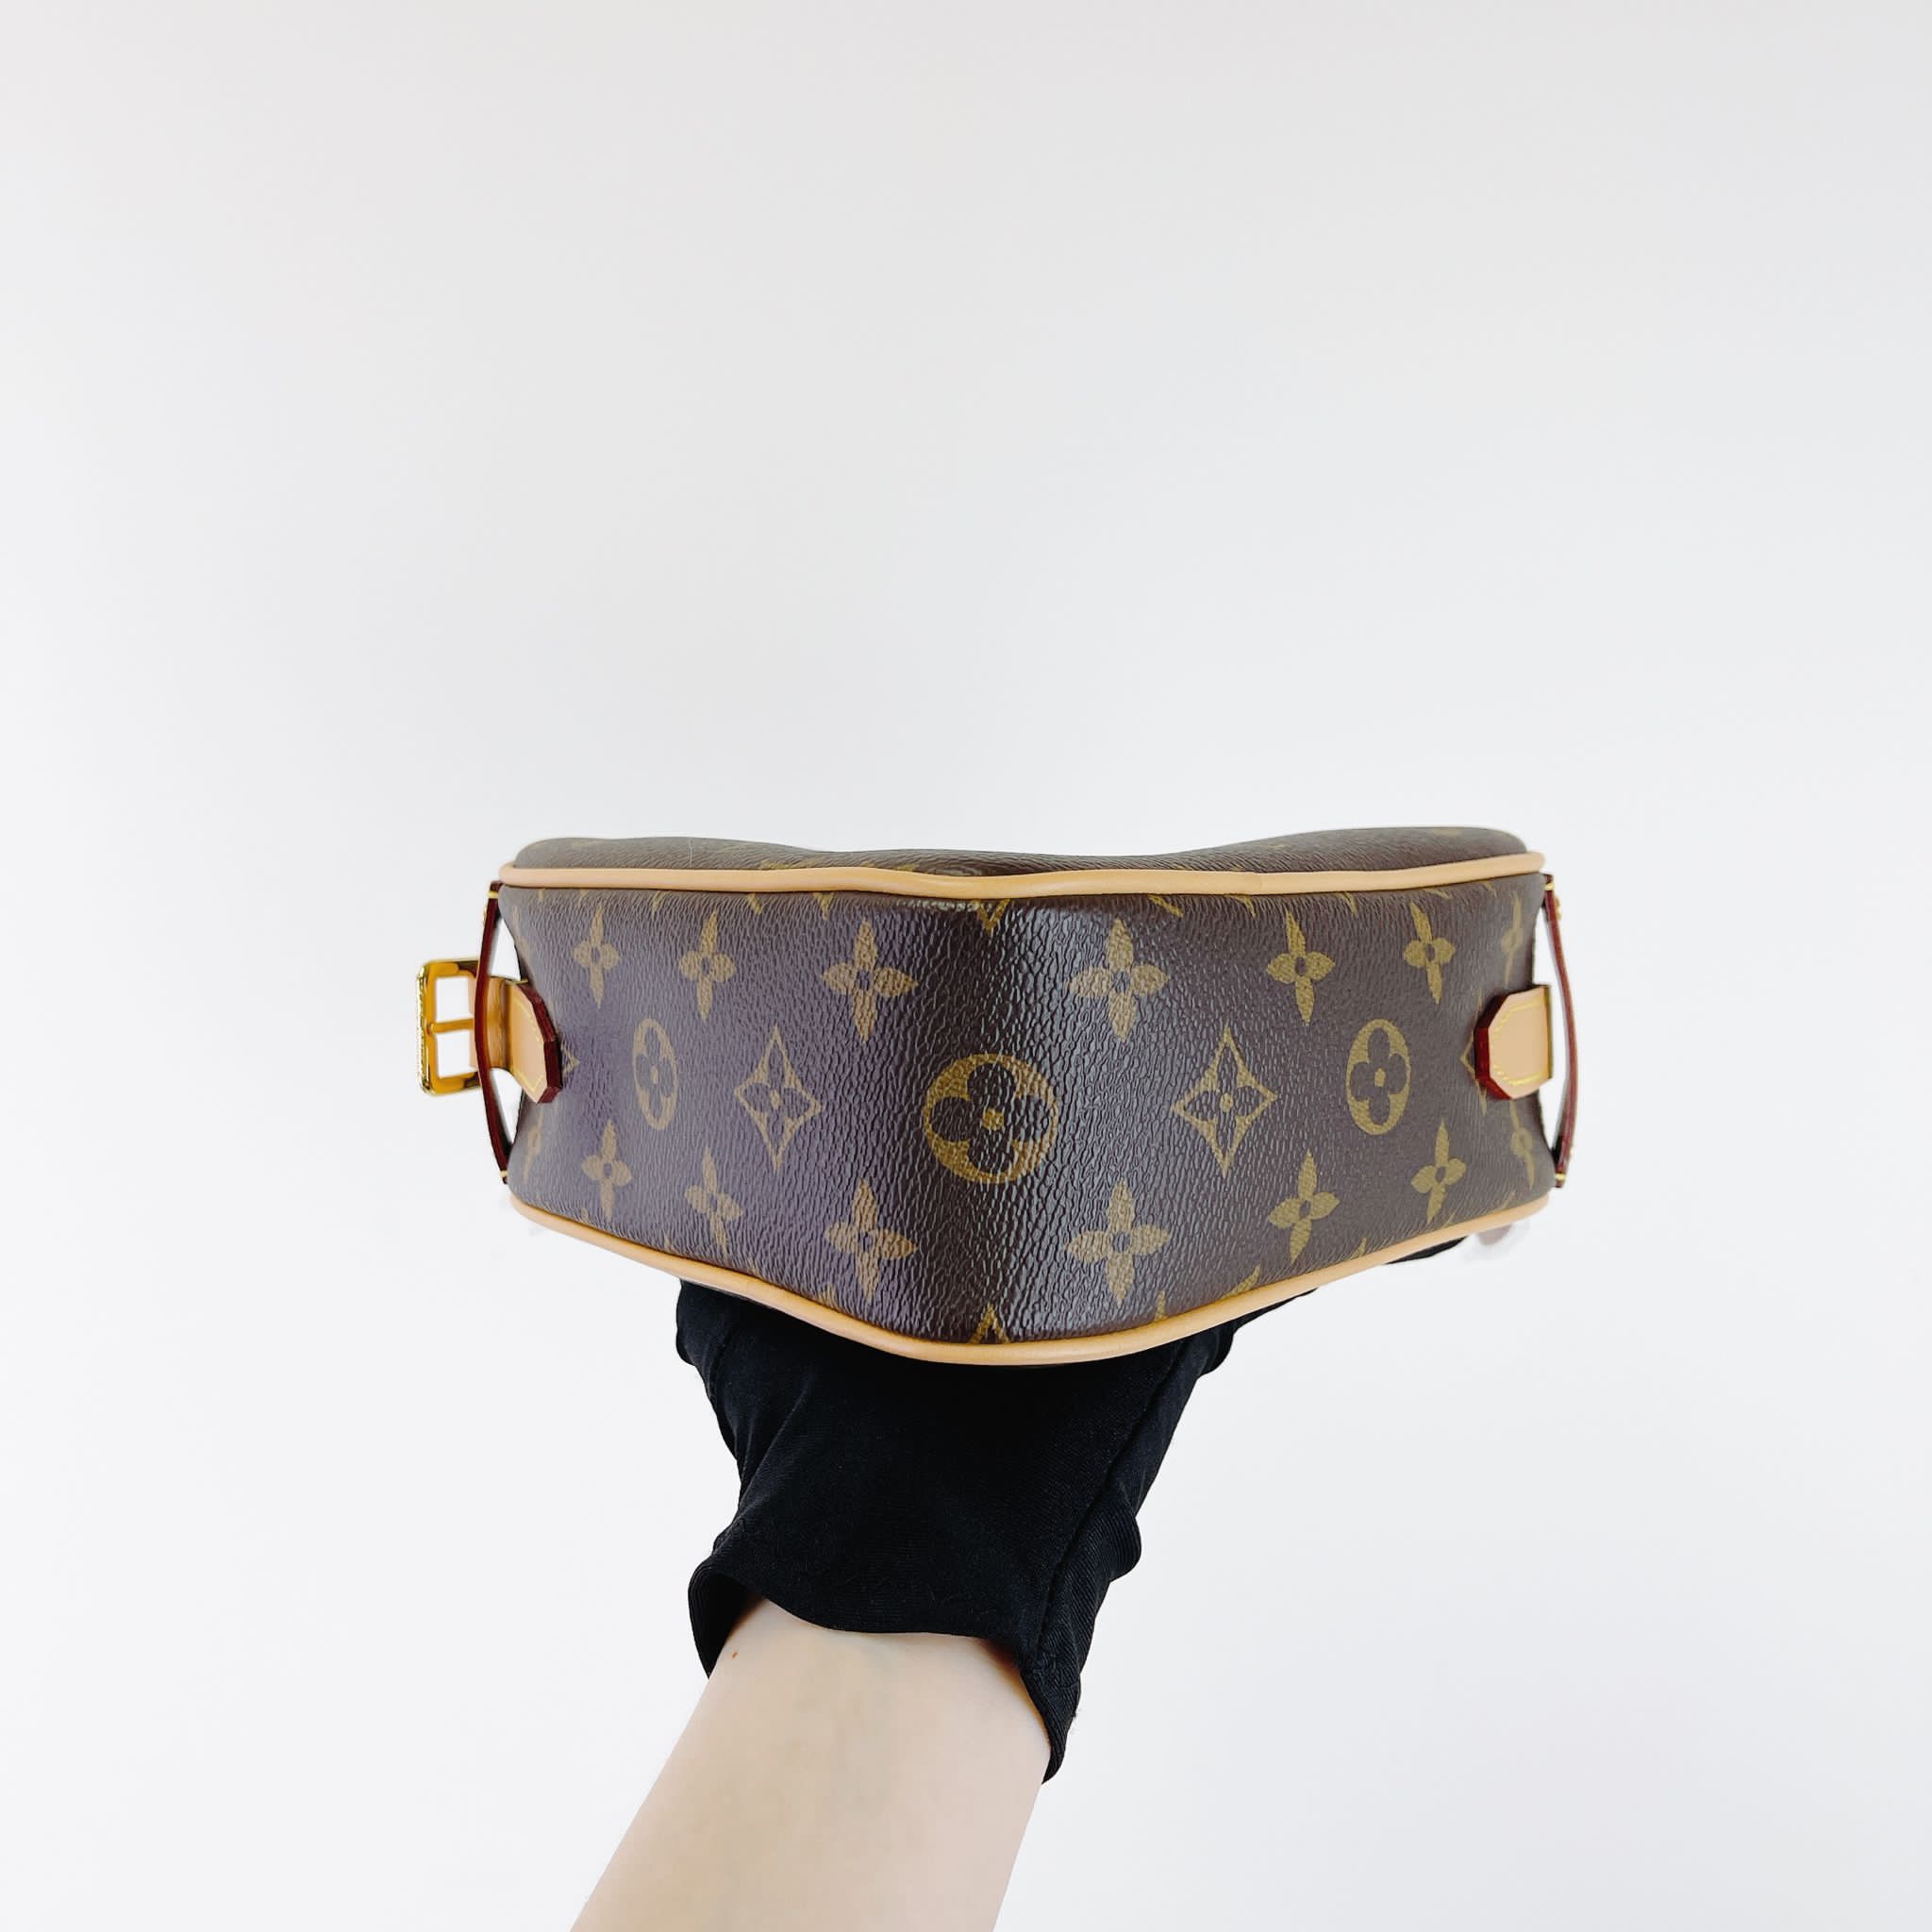 The gate ftw 🙌 This Louis Vuitton Coeur Heart Bag is roomier than